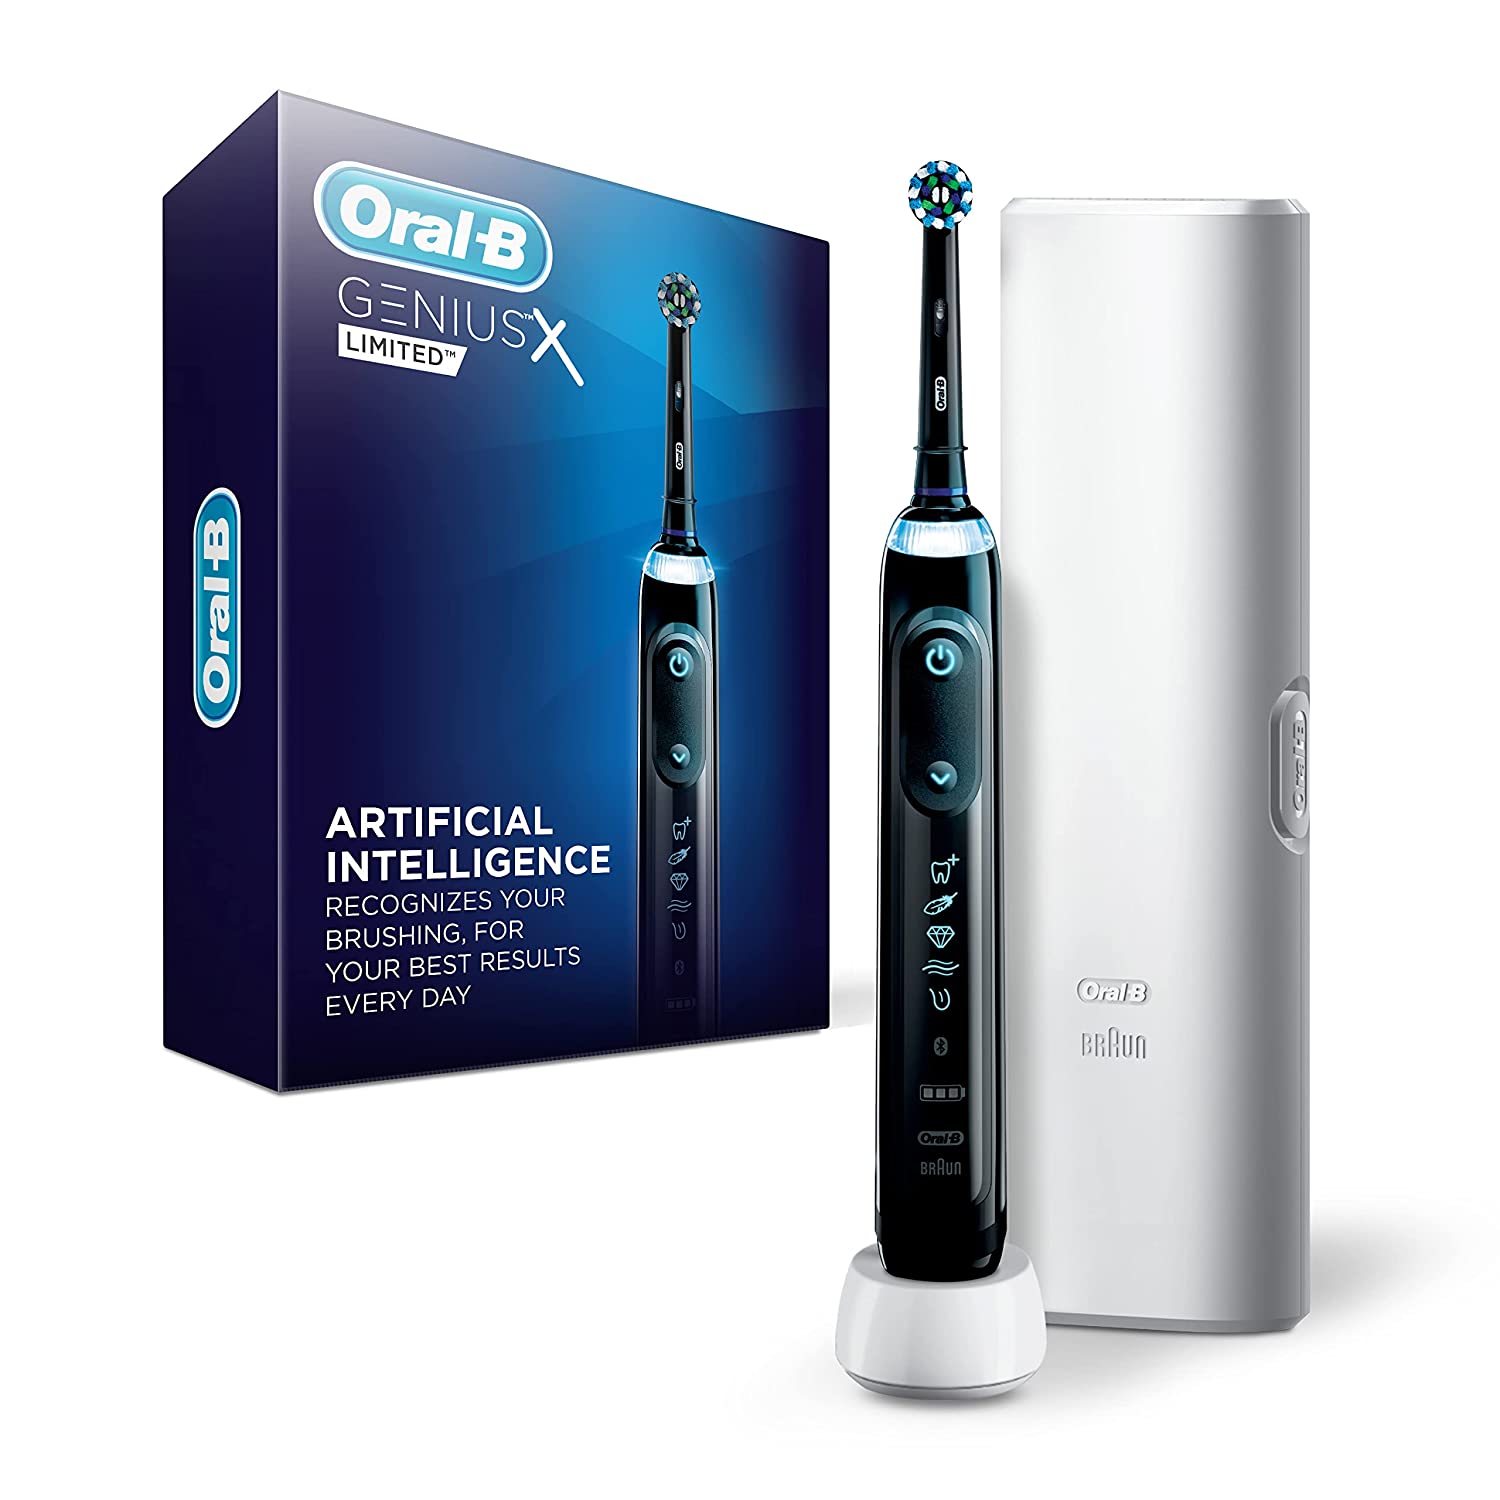 Oral-B Genius X Limited AI Toothbrush